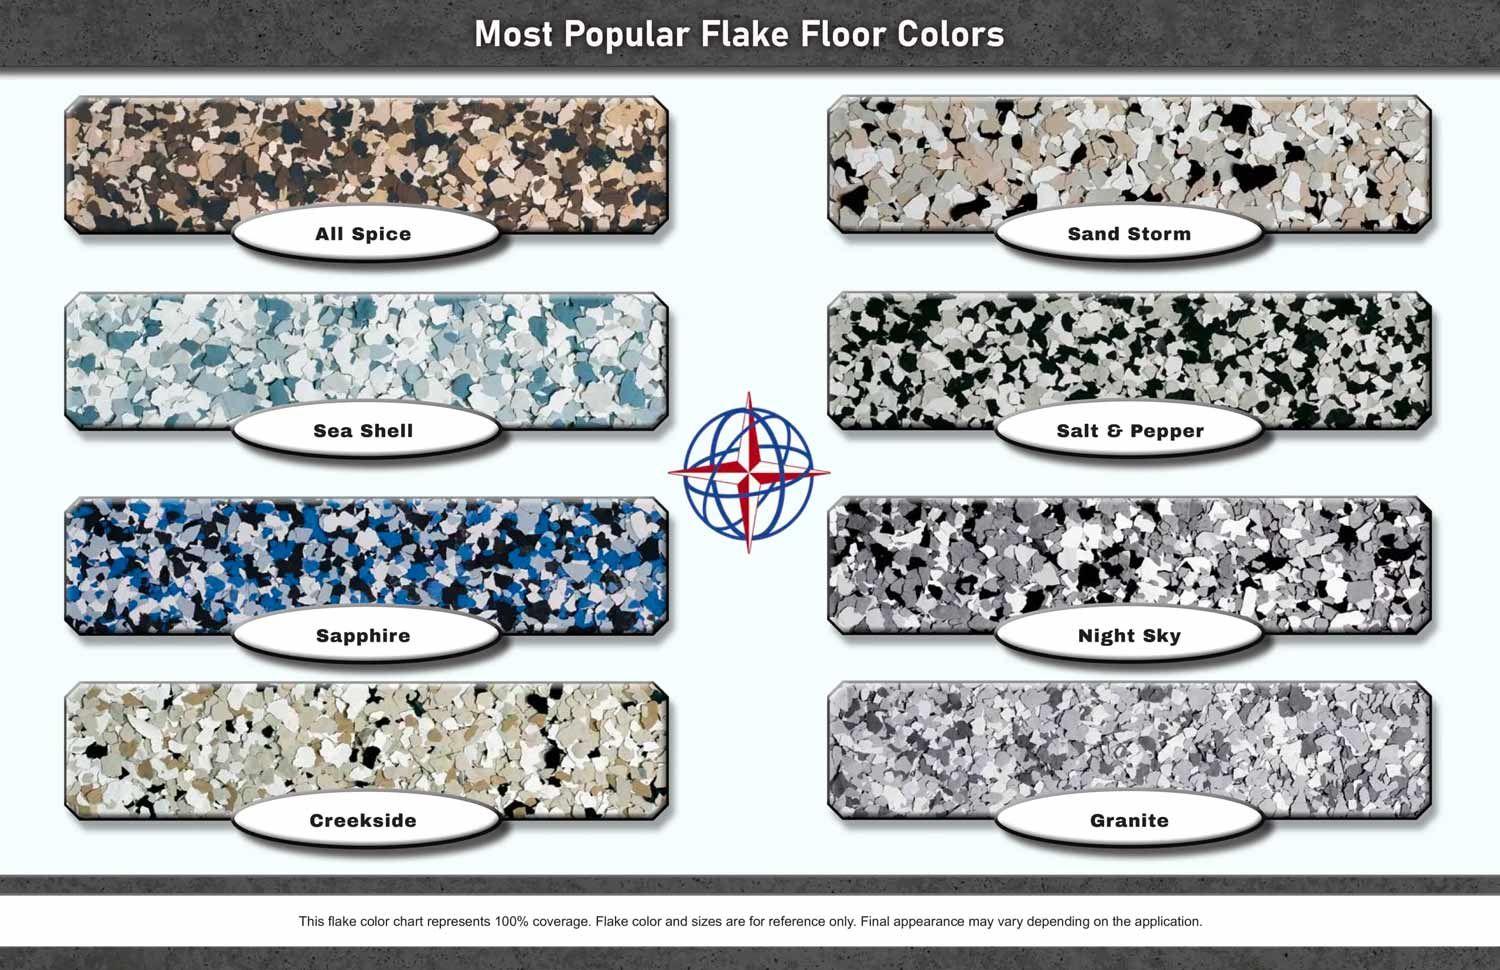 Most Popular Flake Floor Colors